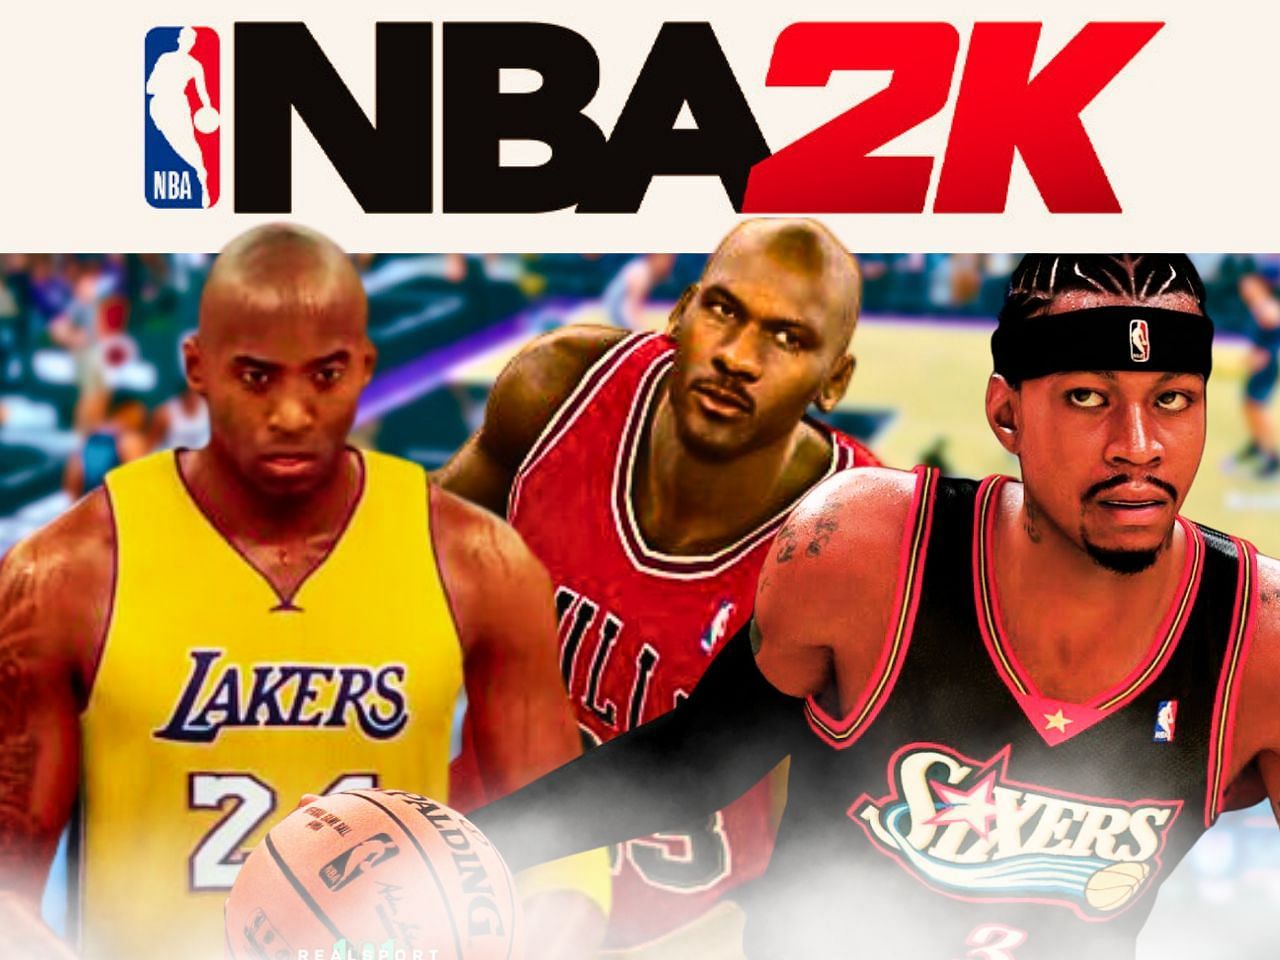 NBA 2K cover athletes - Michael Jordan, Kobe Bryant, and Allen Iverson